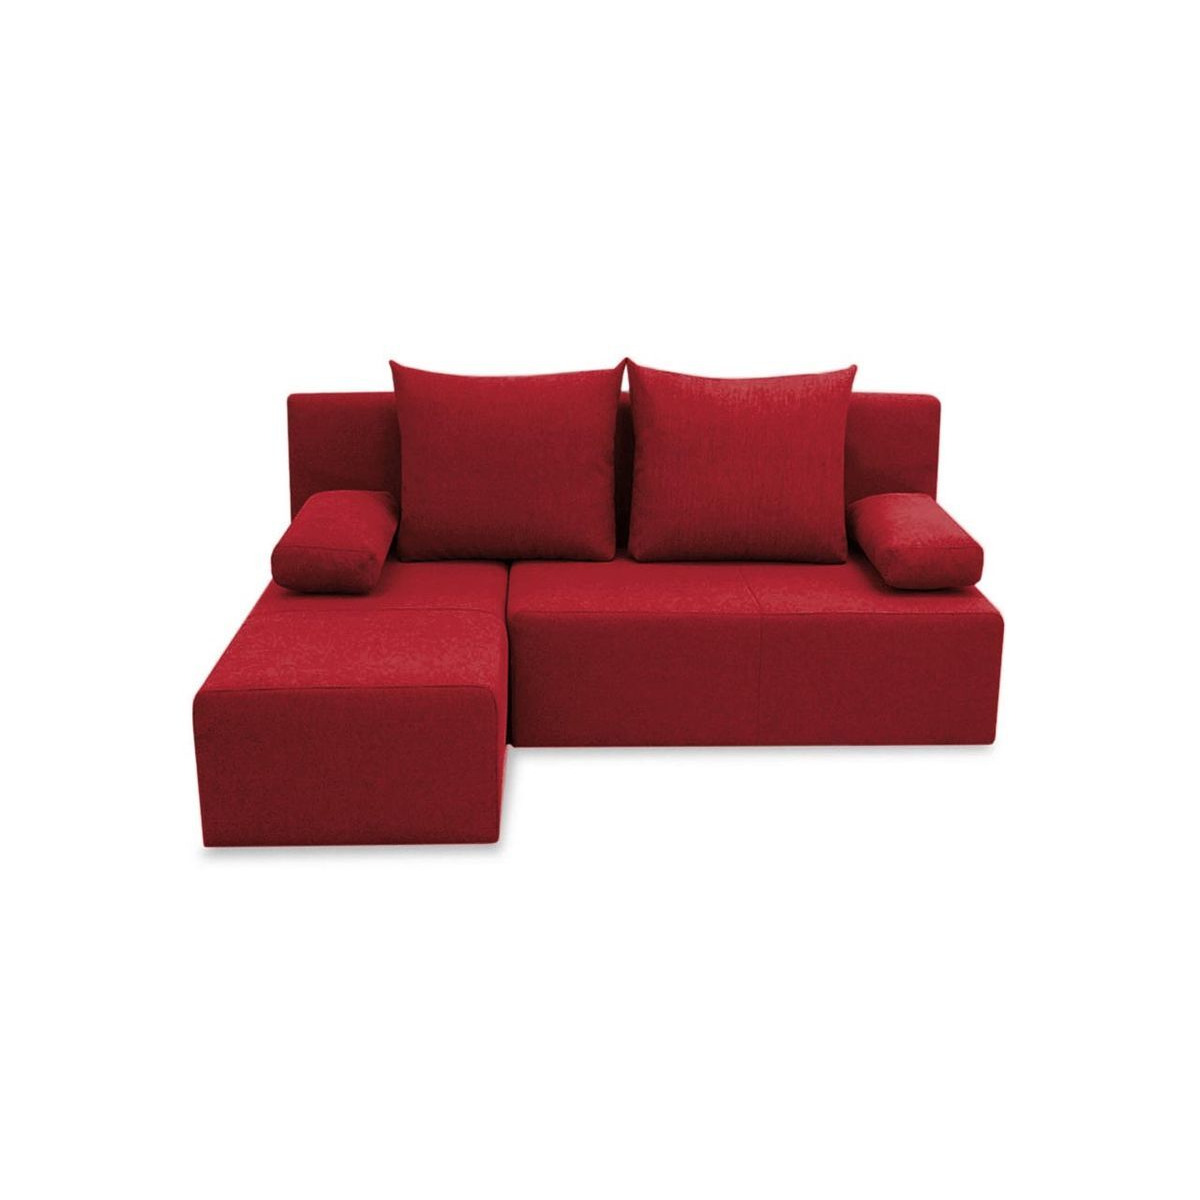 Novel Corner Sofa Bed With Storage, red - image 1